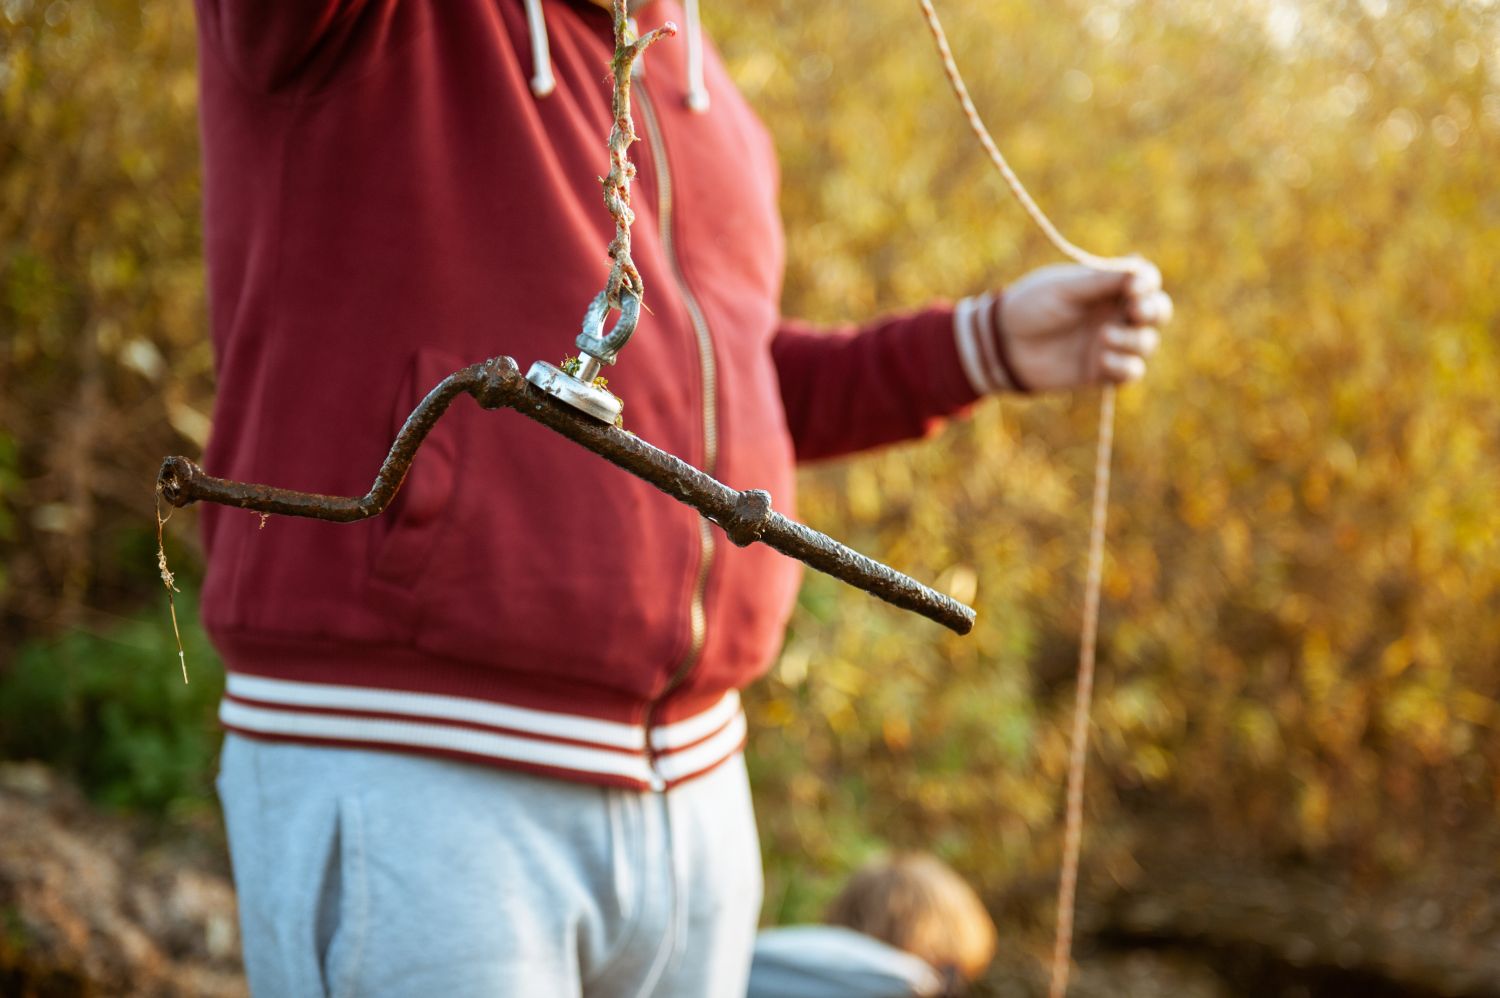 Interdiction de pratiquer la pêche à l'aimant en Moselle - Sarreguemines